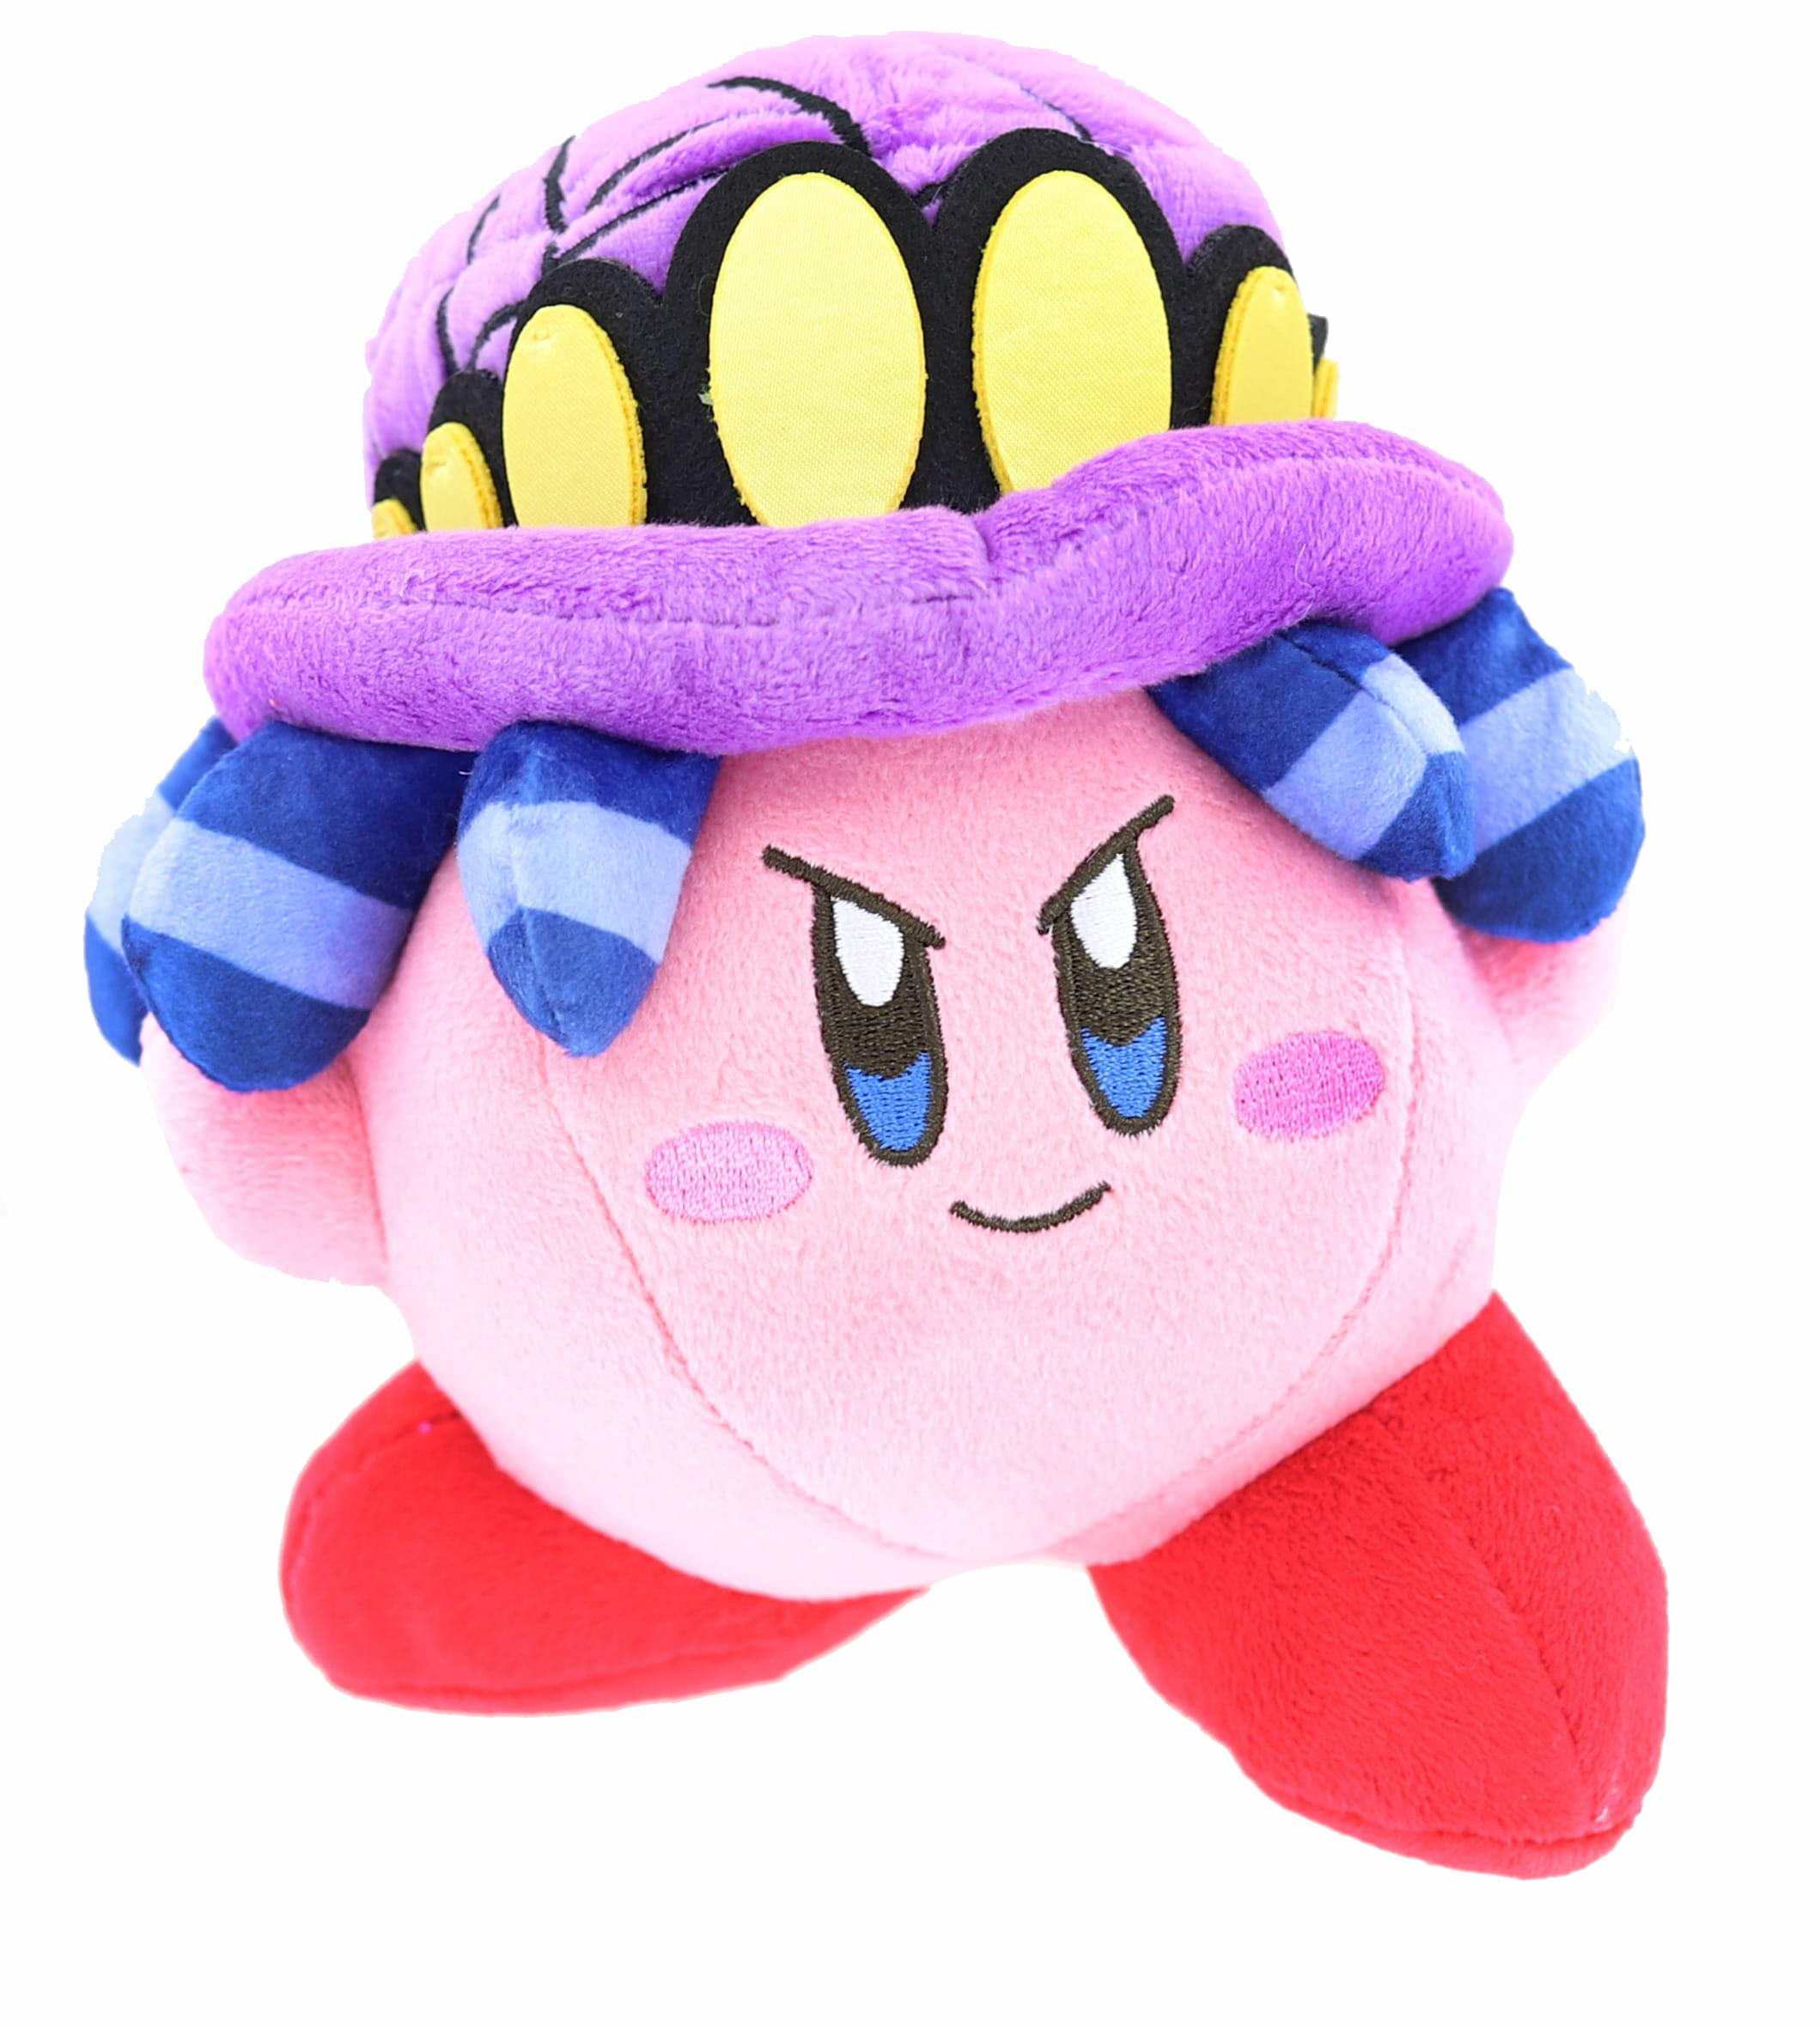 Kirby's Adventure Meta Knight 6-Inch Plush